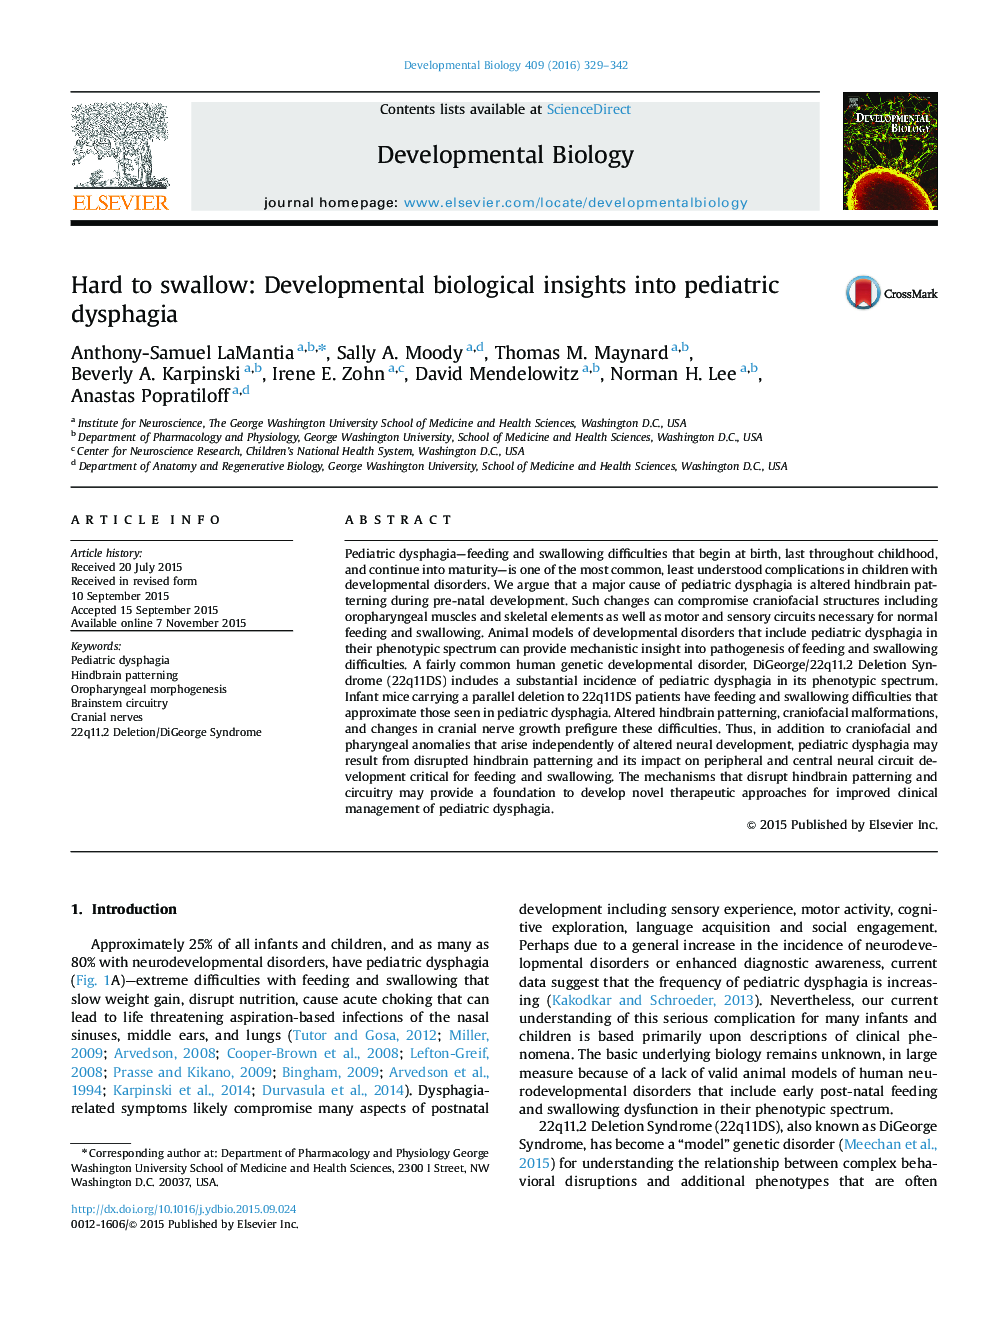 Hard to swallow: Developmental biological insights into pediatric dysphagia